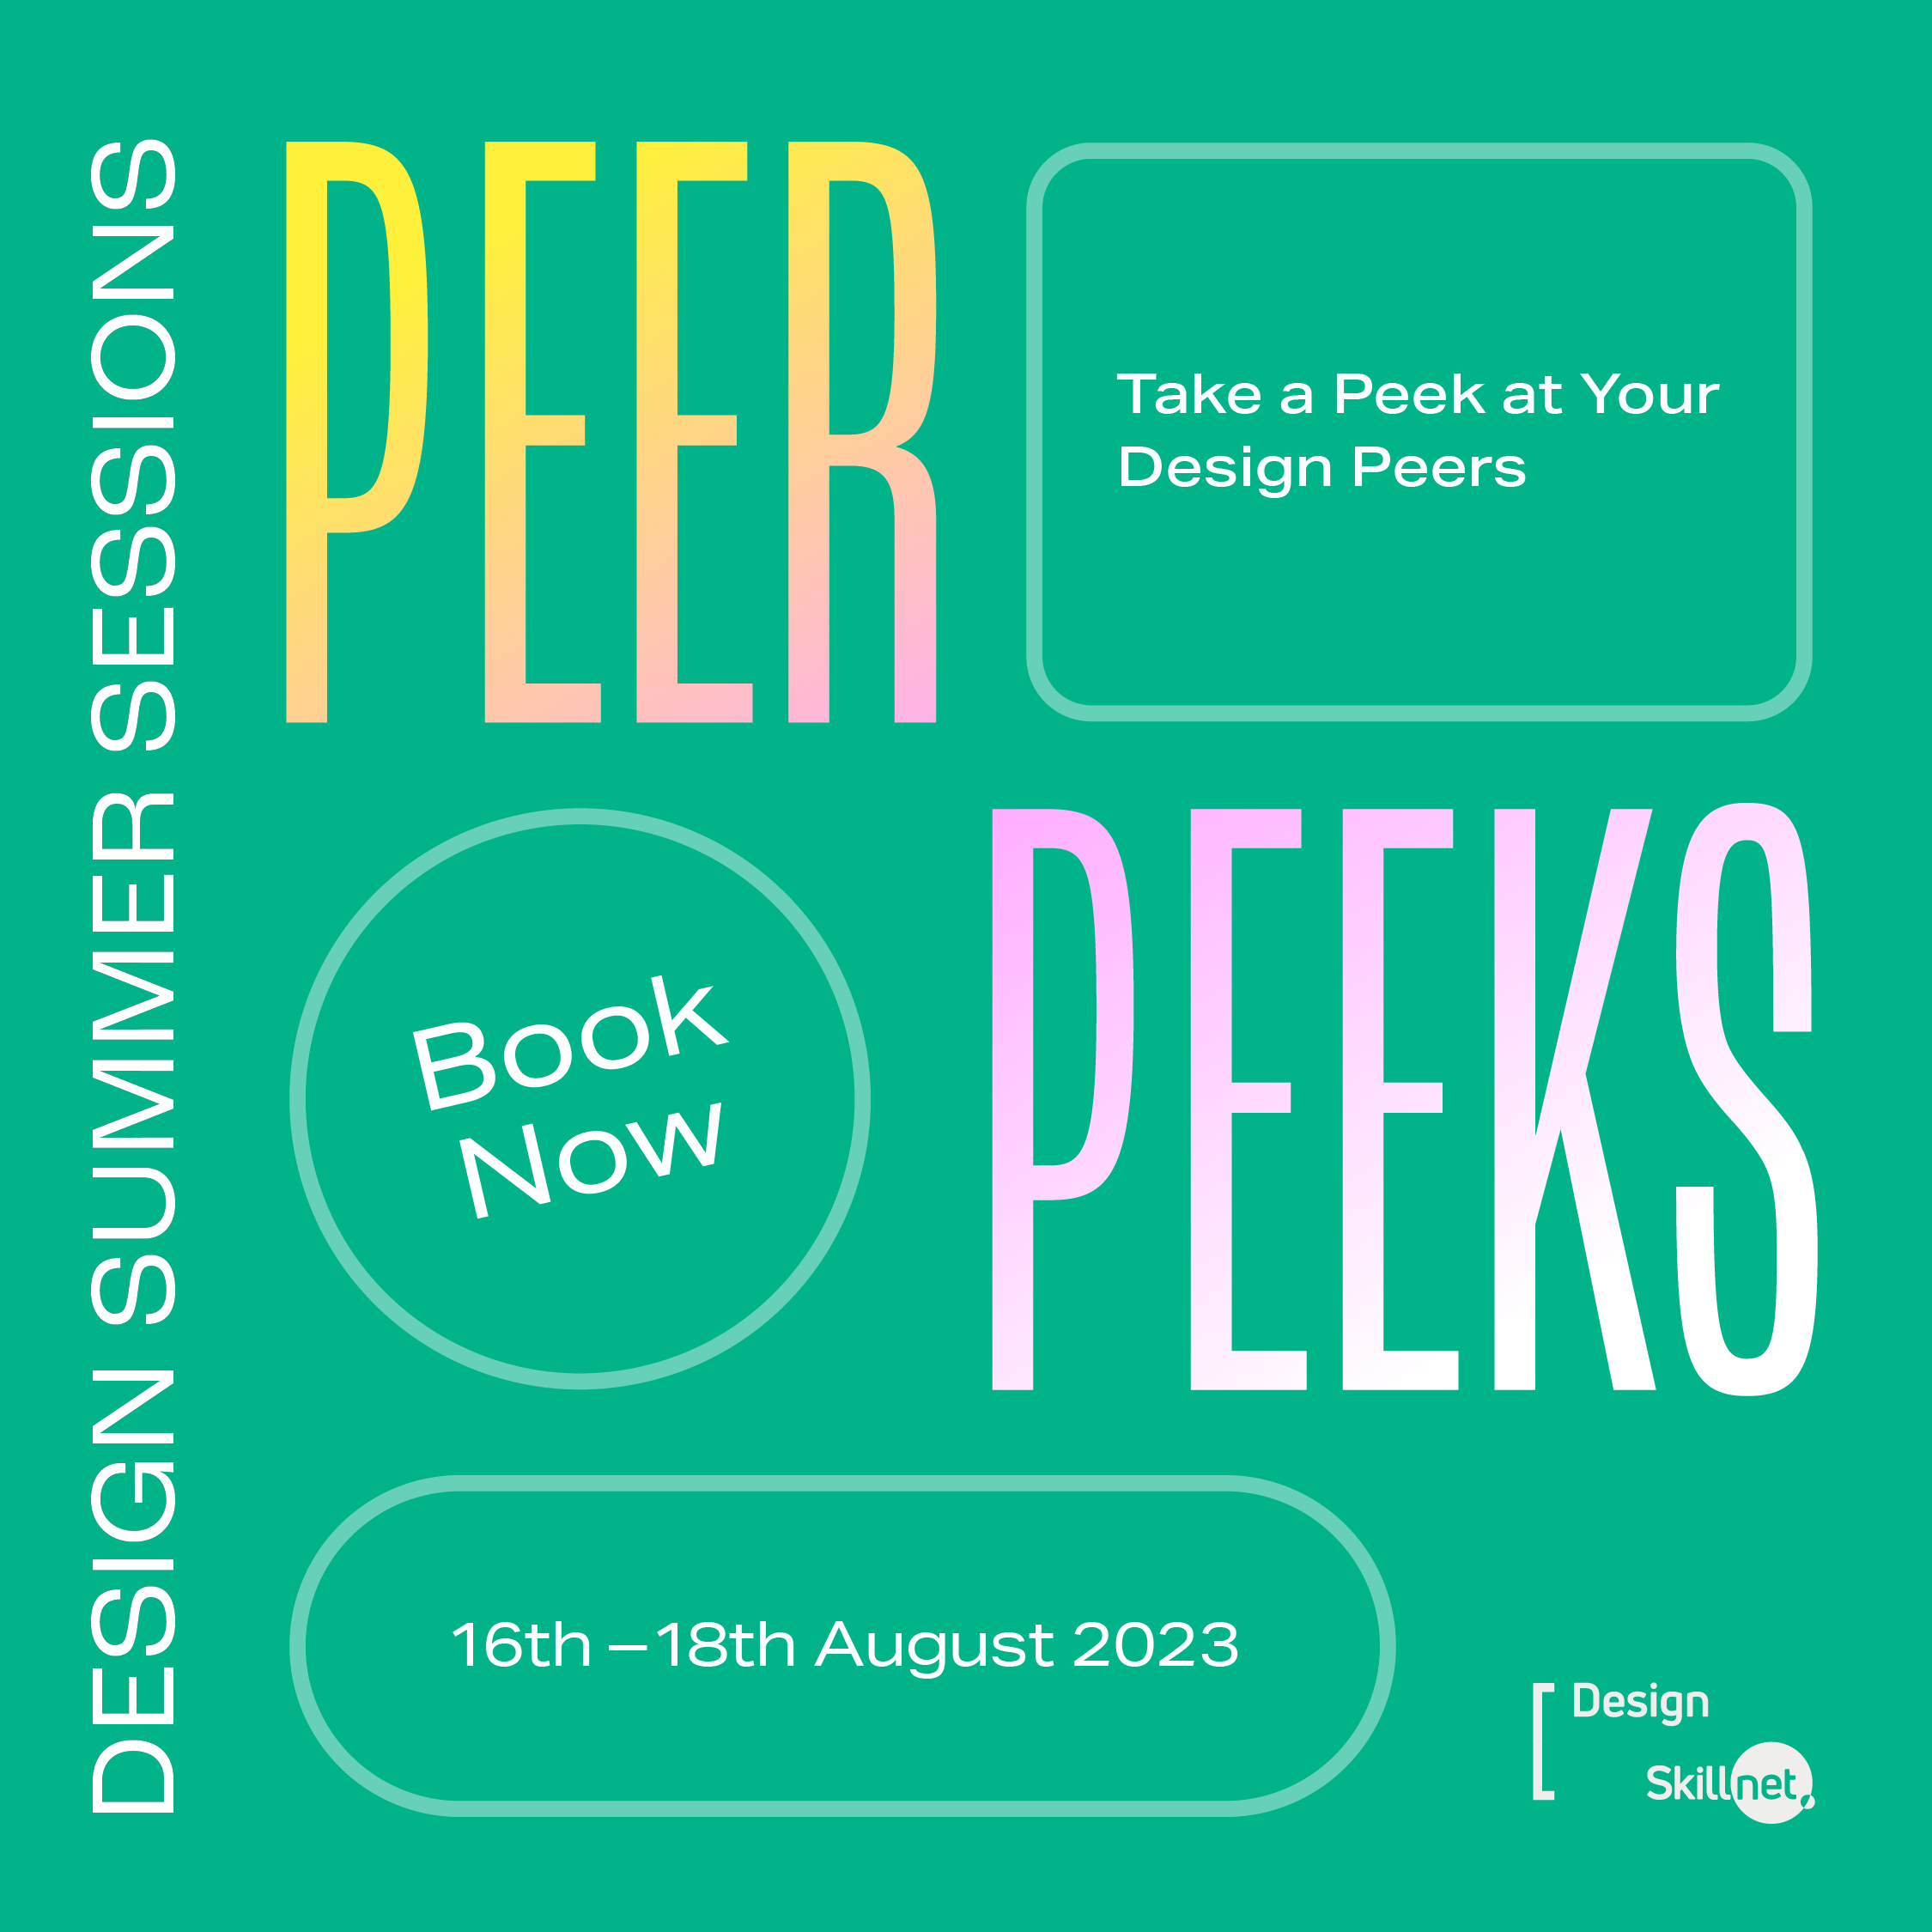 Peer Peek Design Sessions